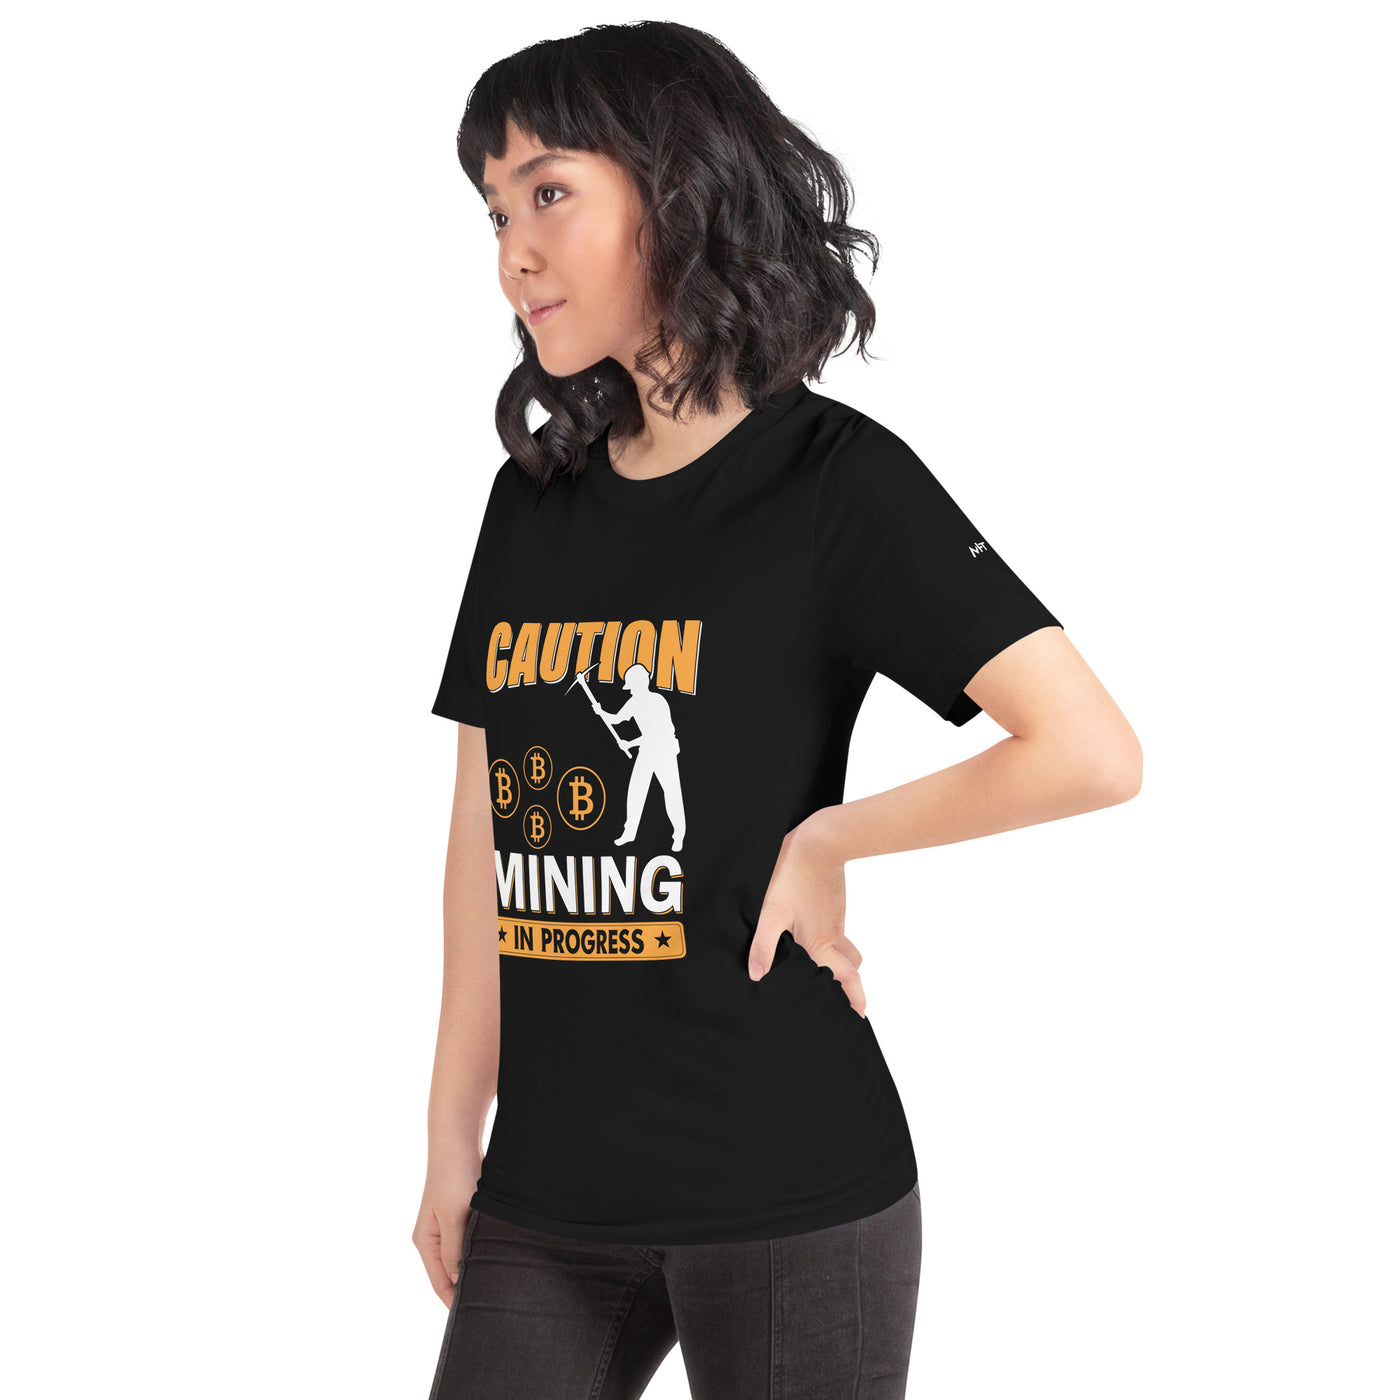 Caution Bitcoin Mining in Progress - Unisex t-shirt